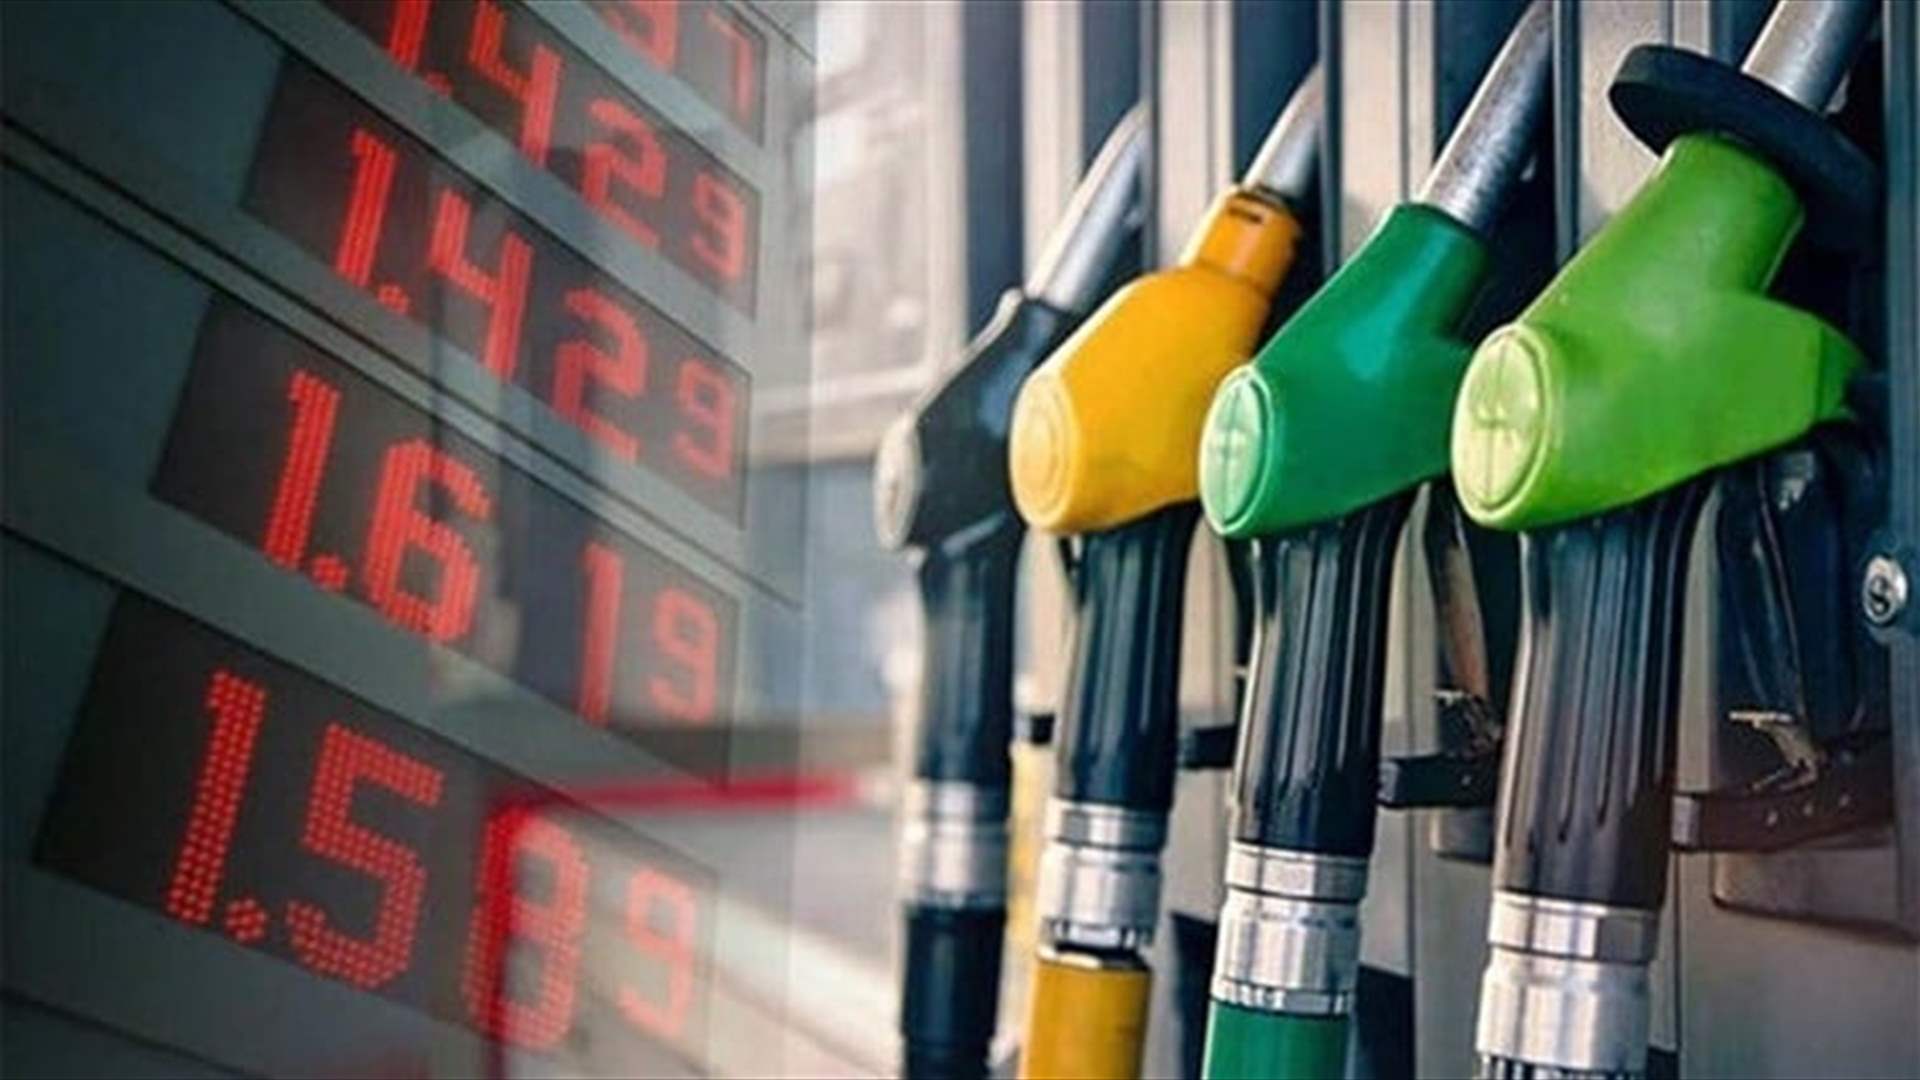 Lebanon fuel prices see slight drop